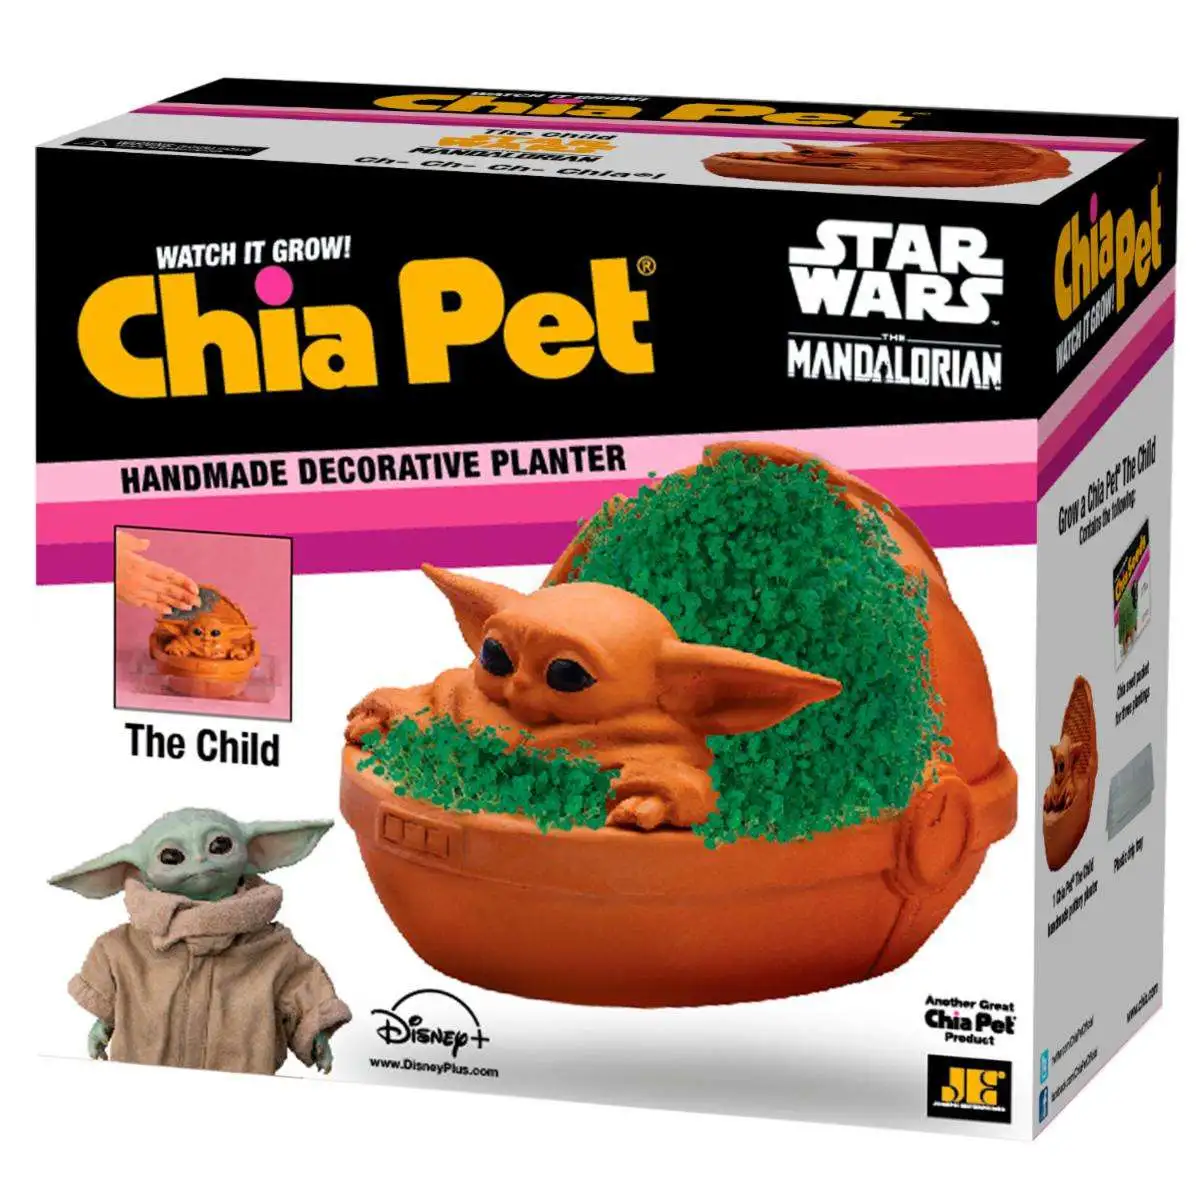 NEW Star Wars The Mandalorian The Child Baby Yoda Chia Pet Decorative Planter 